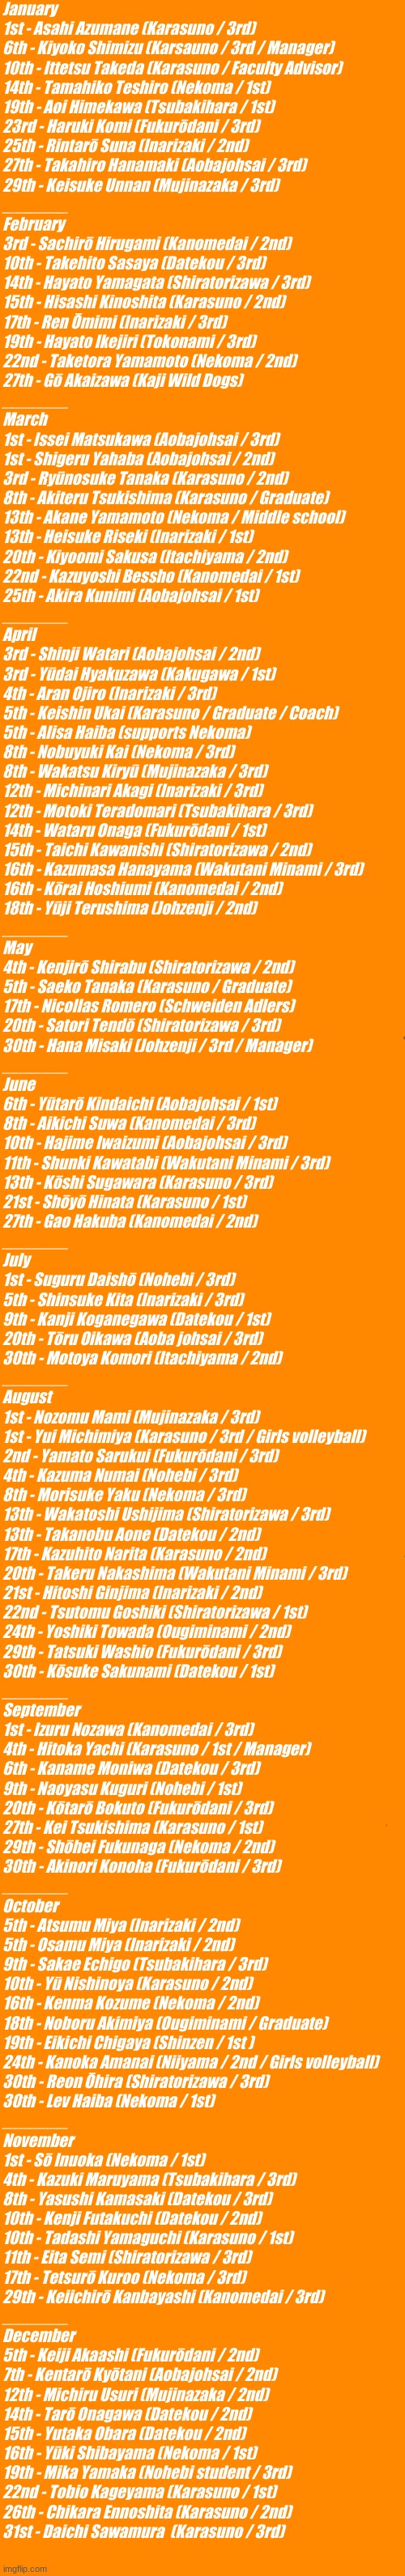 All haikyuu birthdays :)) | January
1st - Asahi Azumane (Karasuno / 3rd)

6th - Kiyoko Shimizu (Karsauno / 3rd / Manager)

10th - Ittetsu Takeda (Karasuno / Faculty Advisor)

14th - Tamahiko Teshiro (Nekoma / 1st)

19th - Aoi Himekawa (Tsubakihara / 1st)

23rd - Haruki Komi (Fukurōdani / 3rd)

25th - Rintarō Suna (Inarizaki / 2nd)

27th - Takahiro Hanamaki (Aobajohsai / 3rd)

29th - Keisuke Unnan (Mujinazaka / 3rd)
_______
February
3rd - Sachirō Hirugami (Kanomedai / 2nd)

10th - Takehito Sasaya (Datekou / 3rd)

14th - Hayato Yamagata (Shiratorizawa / 3rd)

15th - Hisashi Kinoshita (Karasuno / 2nd)

17th - Ren Ōmimi (Inarizaki / 3rd)

19th - Hayato Ikejiri (Tokonami / 3rd)

22nd - Taketora Yamamoto (Nekoma / 2nd)

27th - Gō Akaizawa (Kaji Wild Dogs)
_______

March
1st - Issei Matsukawa (Aobajohsai / 3rd)

1st - Shigeru Yahaba (Aobajohsai / 2nd)

3rd - Ryūnosuke Tanaka (Karasuno / 2nd)

8th - Akiteru Tsukishima (Karasuno / Graduate)

13th - Akane Yamamoto (Nekoma / Middle school)

13th - Heisuke Riseki (Inarizaki / 1st)

20th - Kiyoomi Sakusa (Itachiyama / 2nd)

22nd - Kazuyoshi Bessho (Kanomedai / 1st)

25th - Akira Kunimi (Aobajohsai / 1st)
_______

April
3rd - Shinji Watari (Aobajohsai / 2nd)

3rd - Yūdai Hyakuzawa (Kakugawa / 1st)

4th - Aran Ojiro (Inarizaki / 3rd)

5th - Keishin Ukai (Karasuno / Graduate / Coach)

5th - Alisa Haiba (supports Nekoma)

8th - Nobuyuki Kai (Nekoma / 3rd)

8th - Wakatsu Kiryū (Mujinazaka / 3rd)

12th - Michinari Akagi (Inarizaki / 3rd)

12th - Motoki Teradomari (Tsubakihara / 3rd)

14th - Wataru Onaga (Fukurōdani / 1st)

15th - Taichi Kawanishi (Shiratorizawa / 2nd)

16th - Kazumasa Hanayama (Wakutani Minami / 3rd)

16th - Kōrai Hoshiumi (Kanomedai / 2nd)

18th - Yūji Terushima (Johzenji / 2nd)
_______

May
4th - Kenjirō Shirabu (Shiratorizawa / 2nd)

5th - Saeko Tanaka (Karasuno / Graduate)

17th - Nicollas Romero (Schweiden Adlers)

20th - Satori Tendō (Shiratorizawa / 3rd)

30th - Hana Misaki (Johzenji / 3rd / Manager)
_______

June
6th - Yūtarō Kindaichi (Aobajohsai / 1st)

8th - Aikichi Suwa (Kanomedai / 3rd)

10th - Hajime Iwaizumi (Aobajohsai / 3rd)

11th - Shunki Kawatabi (Wakutani Minami / 3rd)

13th - Kōshi Sugawara (Karasuno / 3rd)

21st - Shōyō Hinata (Karasuno / 1st)

27th - Gao Hakuba (Kanomedai / 2nd)
_______

July
1st - Suguru Daishō (Nohebi / 3rd)

5th - Shinsuke Kita (Inarizaki / 3rd)

9th - Kanji Koganegawa (Datekou / 1st)

20th - Tōru Oikawa (Aoba johsai / 3rd)

30th - Motoya Komori (Itachiyama / 2nd)
_______

August
1st - Nozomu Mami (Mujinazaka / 3rd)

1st - Yui Michimiya (Karasuno / 3rd / Girls volleyball)

2nd - Yamato Sarukui (Fukurōdani / 3rd)

4th - Kazuma Numai (Nohebi / 3rd)

8th - Morisuke Yaku (Nekoma / 3rd)

13th - Wakatoshi Ushijima (Shiratorizawa / 3rd)

13th - Takanobu Aone (Datekou / 2nd)

17th - Kazuhito Narita (Karasuno / 2nd)

20th - Takeru Nakashima (Wakutani Minami / 3rd)

21st - Hitoshi Ginjima (Inarizaki / 2nd)

22nd - Tsutomu Goshiki (Shiratorizawa / 1st)

24th - Yoshiki Towada (Ougiminami / 2nd)

29th - Tatsuki Washio (Fukurōdani / 3rd)

30th - Kōsuke Sakunami (Datekou / 1st)
_______

September
1st - Izuru Nozawa (Kanomedai / 3rd)

4th - Hitoka Yachi (Karasuno / 1st / Manager)

6th - Kaname Moniwa (Datekou / 3rd)

9th - Naoyasu Kuguri (Nohebi / 1st)

20th - Kōtarō Bokuto (Fukurōdani / 3rd)

27th - Kei Tsukishima (Karasuno / 1st)

29th - Shōhei Fukunaga (Nekoma / 2nd)

30th - Akinori Konoha (Fukurōdani / 3rd)
_______

October
5th - Atsumu Miya (Inarizaki / 2nd)

5th - Osamu Miya (Inarizaki / 2nd)

9th - Sakae Echigo (Tsubakihara / 3rd)

10th - Yū Nishinoya (Karasuno / 2nd)

16th - Kenma Kozume (Nekoma / 2nd)

18th - Noboru Akimiya (Ougiminami / Graduate)

19th - Eikichi Chigaya (Shinzen / 1st )

24th - Kanoka Amanai (Niiyama / 2nd / Girls volleyball)

30th - Reon Ōhira (Shiratorizawa / 3rd)

30th - Lev Haiba (Nekoma / 1st)
_______

November
1st - Sō Inuoka (Nekoma / 1st)

4th - Kazuki Maruyama (Tsubakihara / 3rd)

8th - Yasushi Kamasaki (Datekou / 3rd)

10th - Kenji Futakuchi (Datekou / 2nd)

10th - Tadashi Yamaguchi (Karasuno / 1st)

11th - Eita Semi (Shiratorizawa / 3rd)

17th - Tetsurō Kuroo (Nekoma / 3rd)

29th - Keiichirō Kanbayashi (Kanomedai / 3rd)
_______

December
5th - Keiji Akaashi (Fukurōdani / 2nd)

7th - Kentarō Kyōtani (Aobajohsai / 2nd)

12th - Michiru Usuri (Mujinazaka / 2nd)

14th - Tarō Onagawa (Datekou / 2nd)

15th - Yutaka Obara (Datekou / 2nd)

16th - Yūki Shibayama (Nekoma / 1st)

19th - Mika Yamaka (Nohebi student / 3rd)

22nd - Tobio Kageyama (Karasuno / 1st)

26th - Chikara Ennoshita (Karasuno / 2nd)

31st - Daichi Sawamura  (Karasuno / 3rd) | made w/ Imgflip meme maker